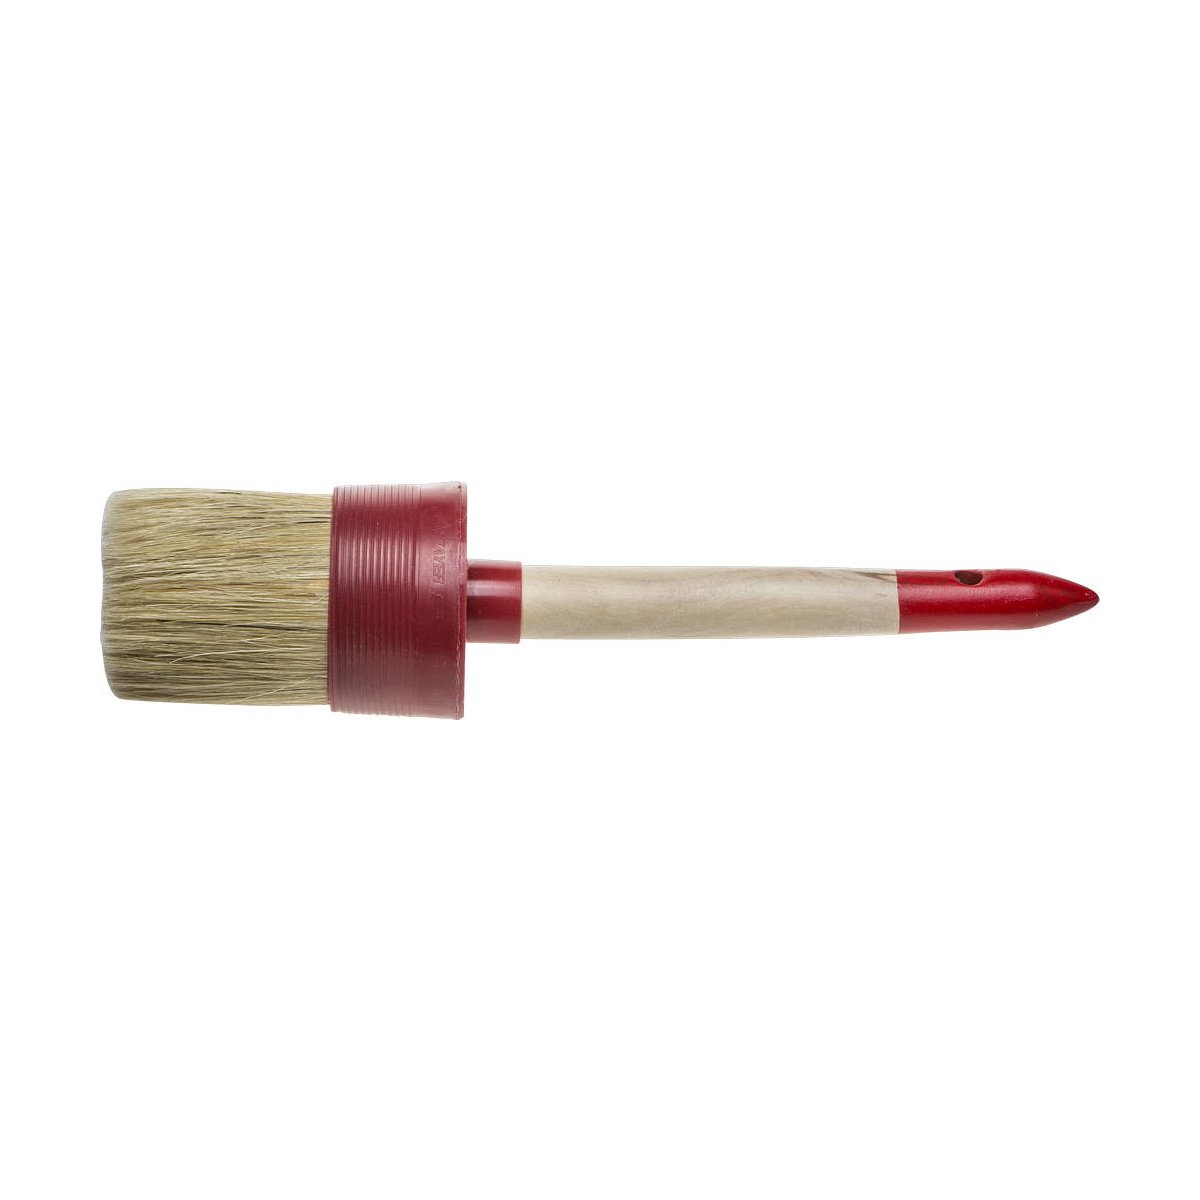 STAYER 65 мм, щетина натуральная, деревянная ручка, кисть малярная круглая 0141-65